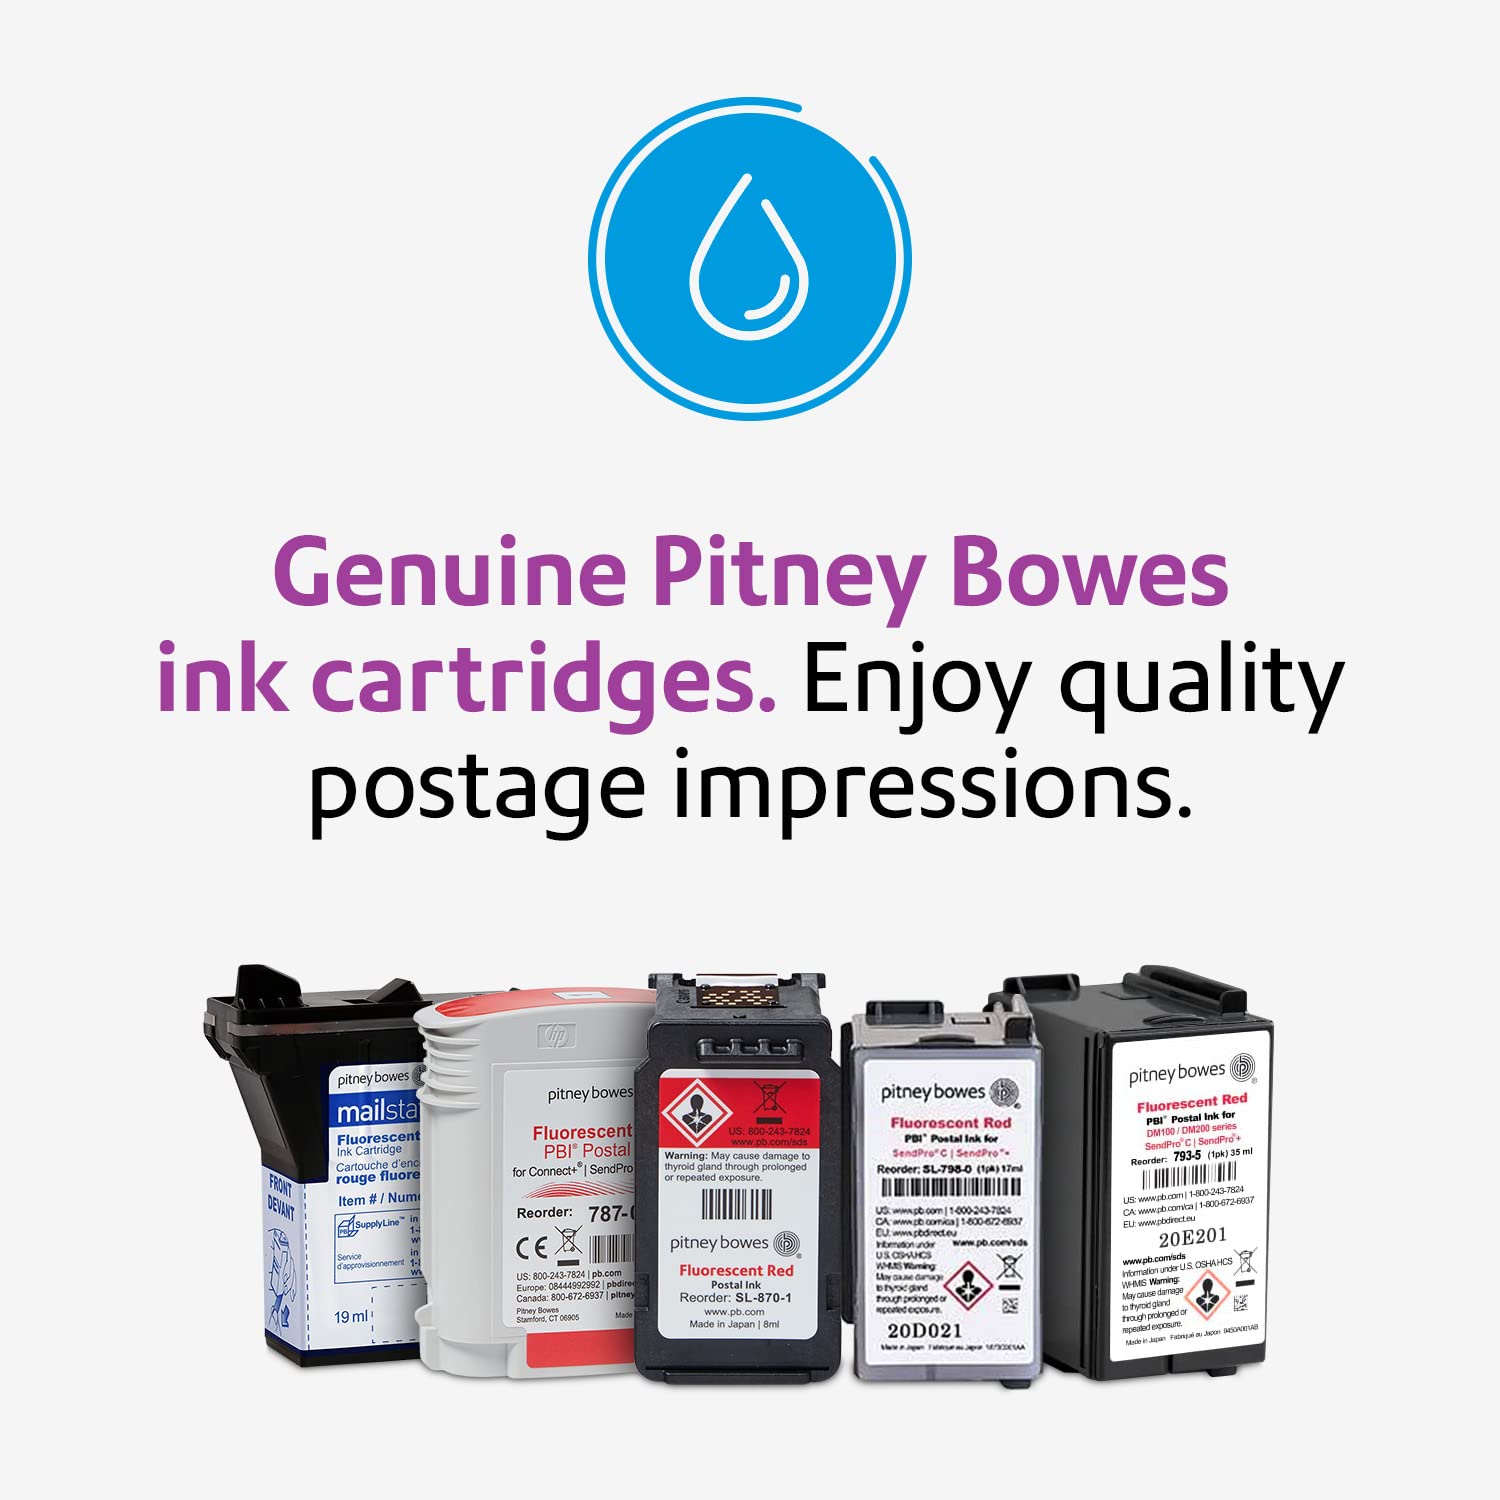 Pitney Bowes SL-870-1 Ink Cartridge for SendPro Mailstation, Red Ink, 8 ml